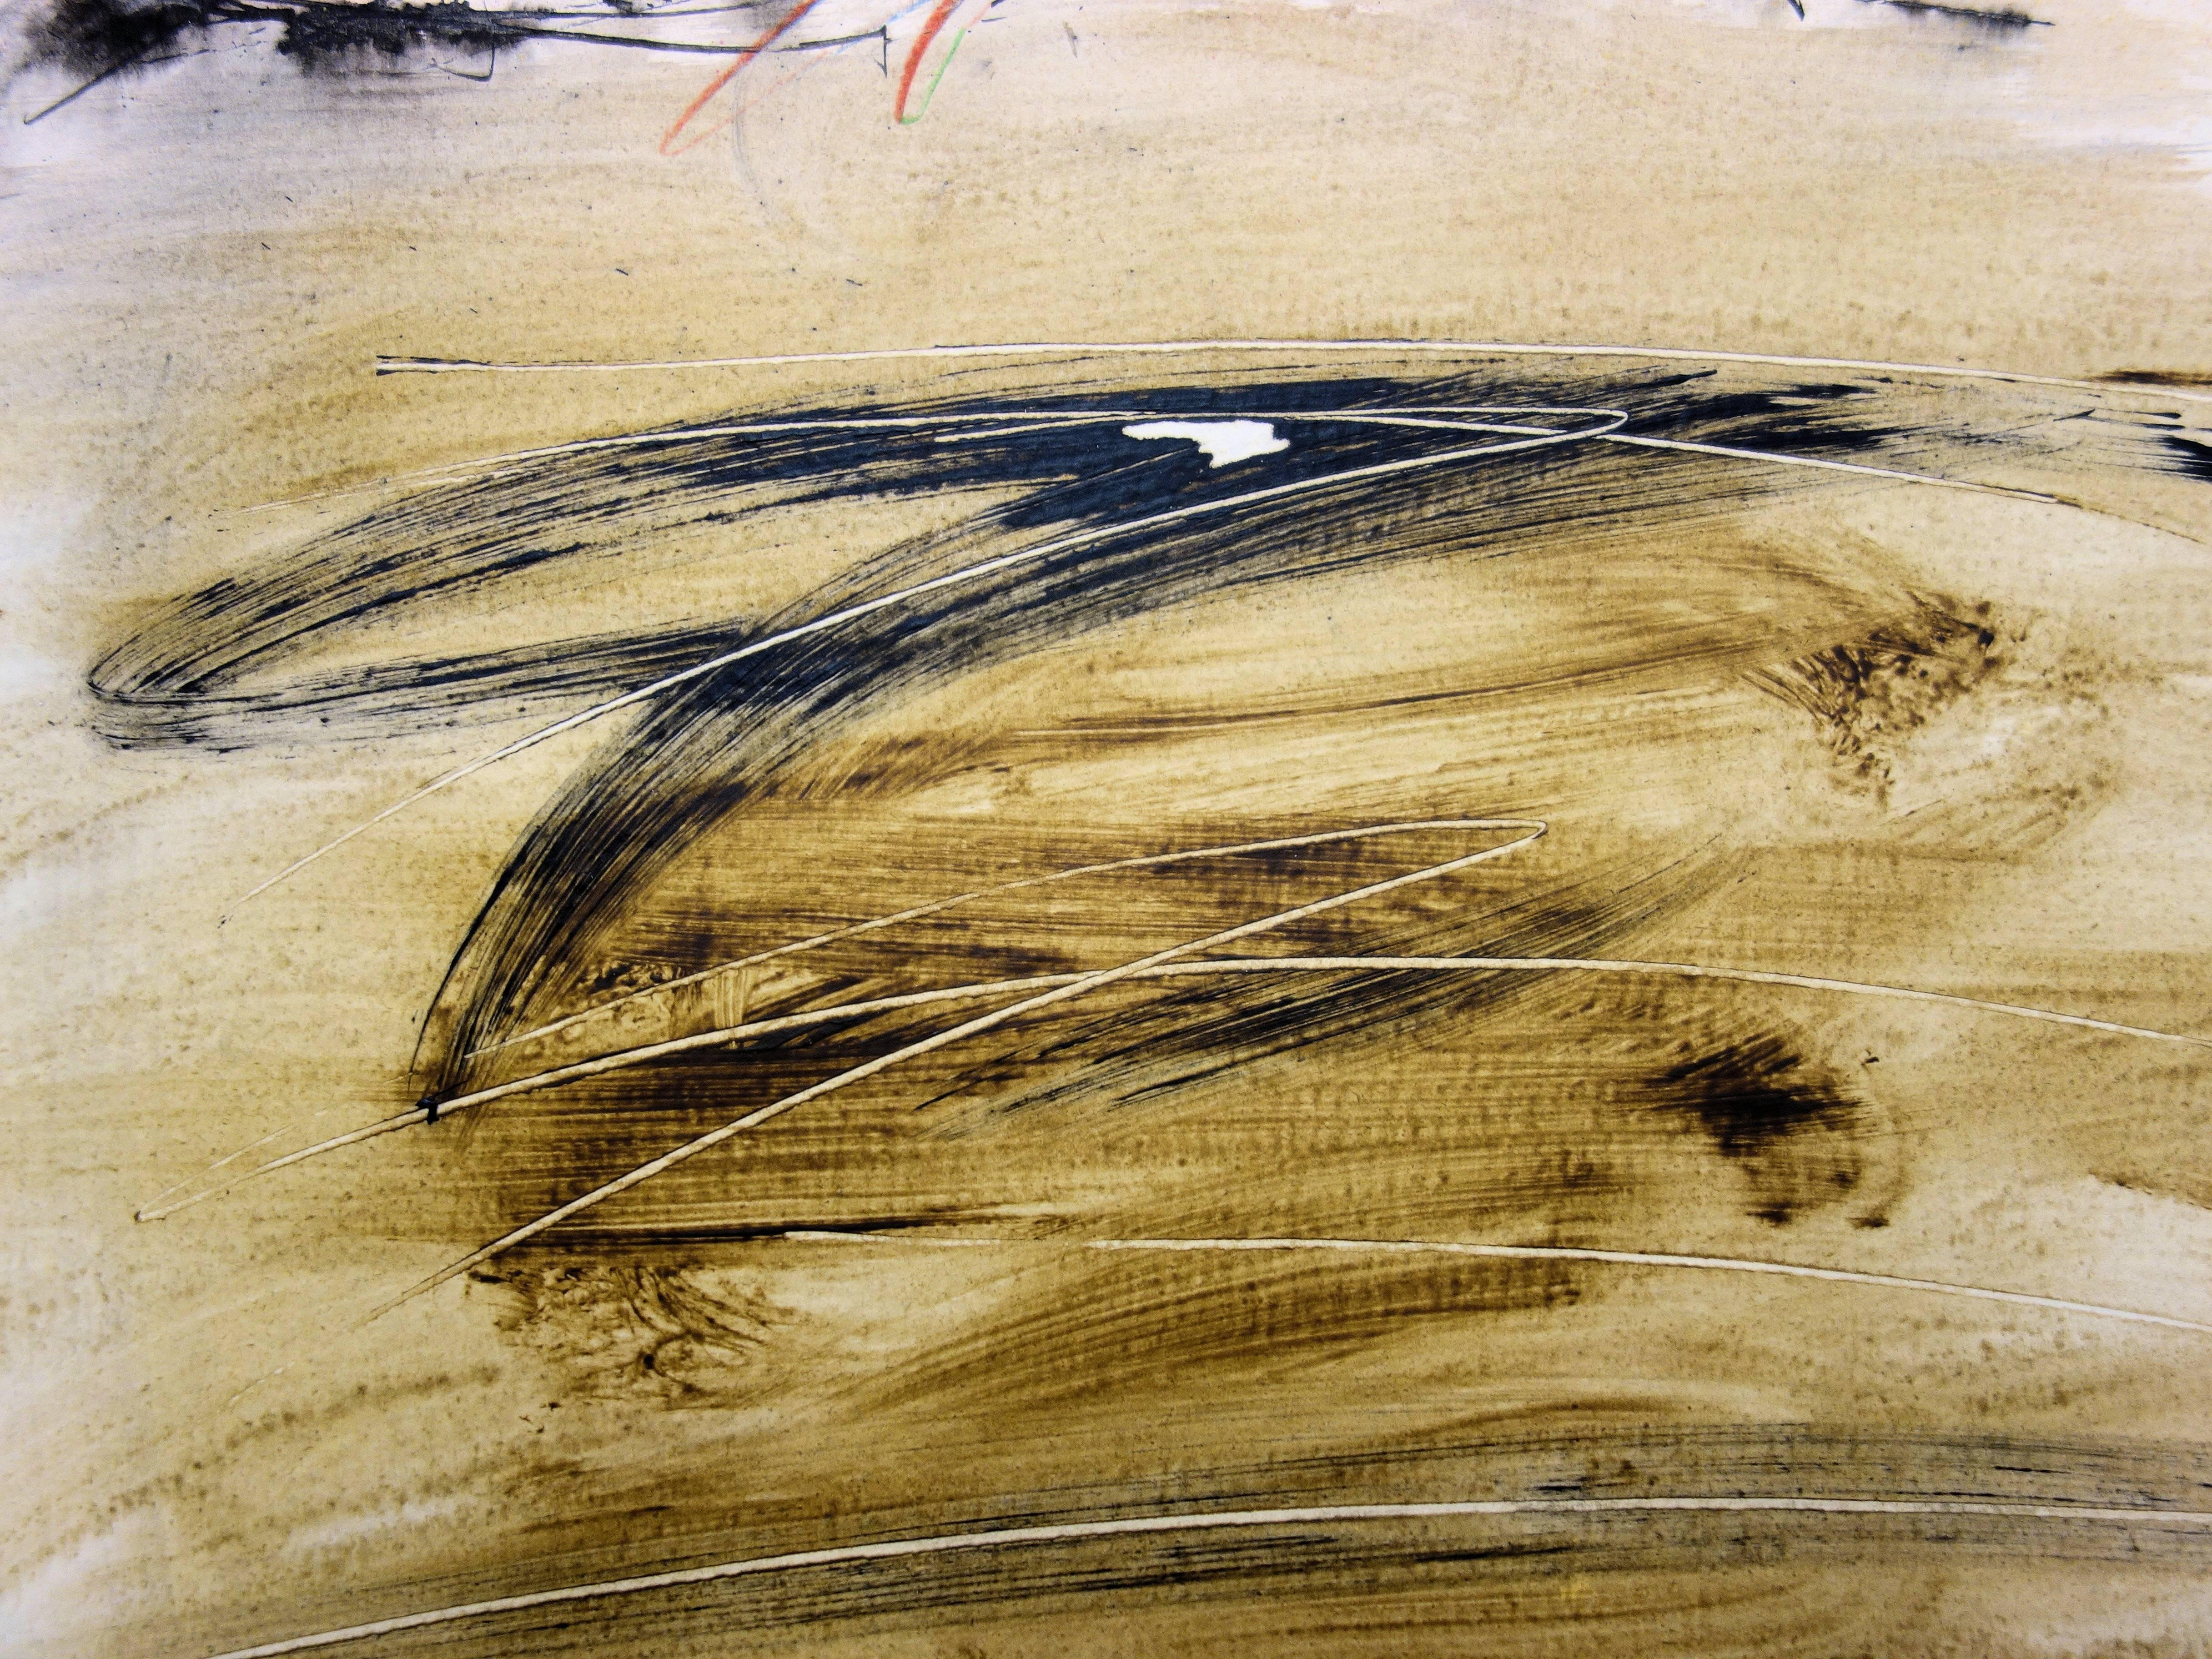 Desert - Original painting on paper - Handsigned - Abstract Print by Julius Baltazar